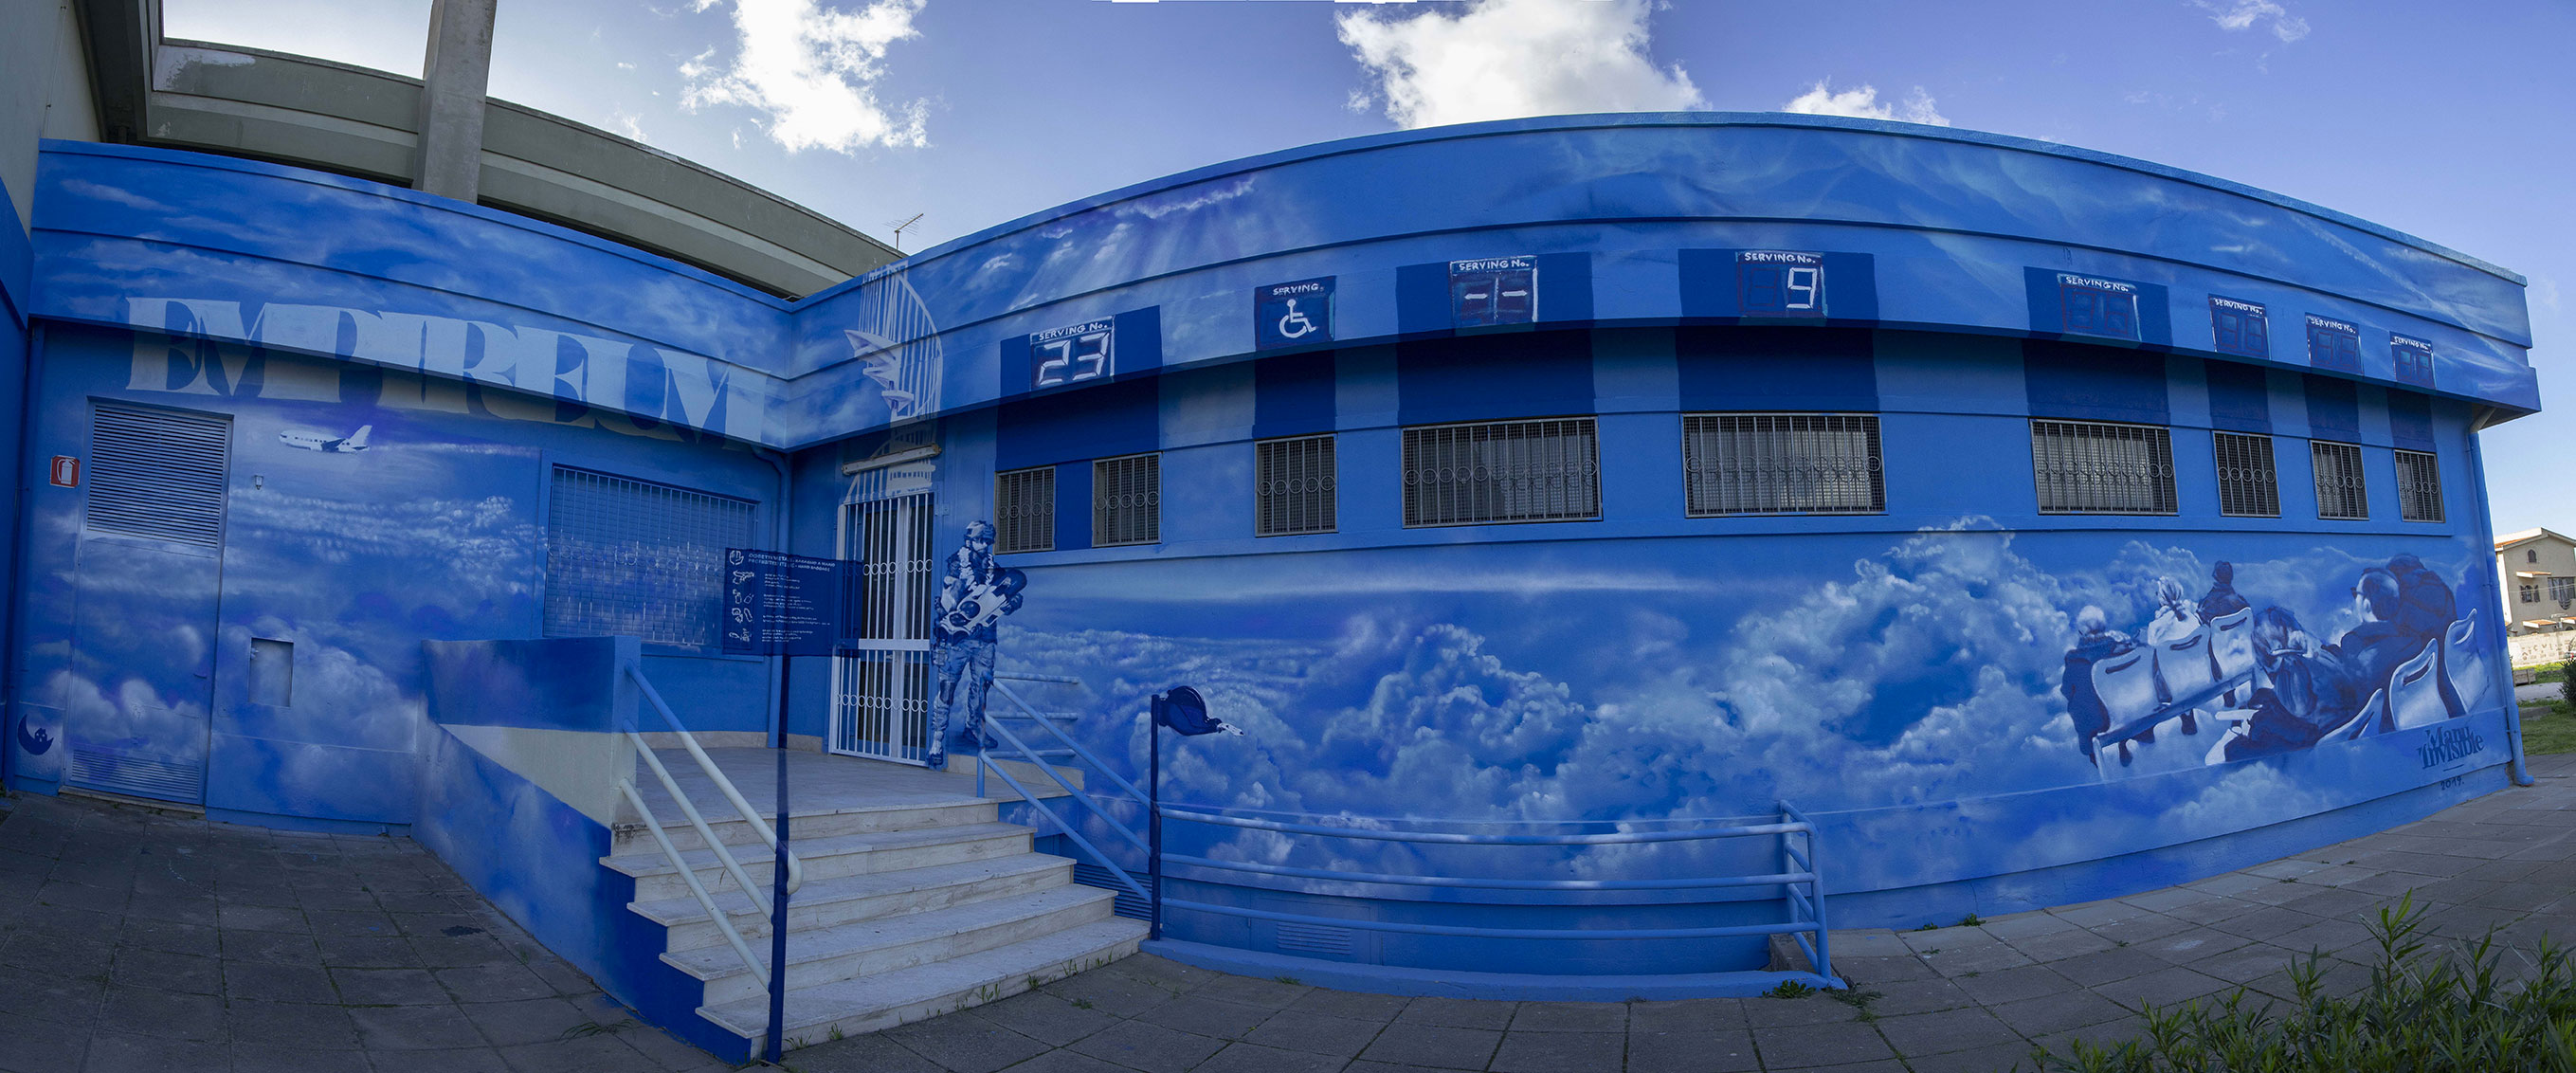 ''EMPIREVM'' Spray et peinture de quartz sur le mur 130 mq (anamorphosé) Dante Secondary School Pirri [CA] 2019